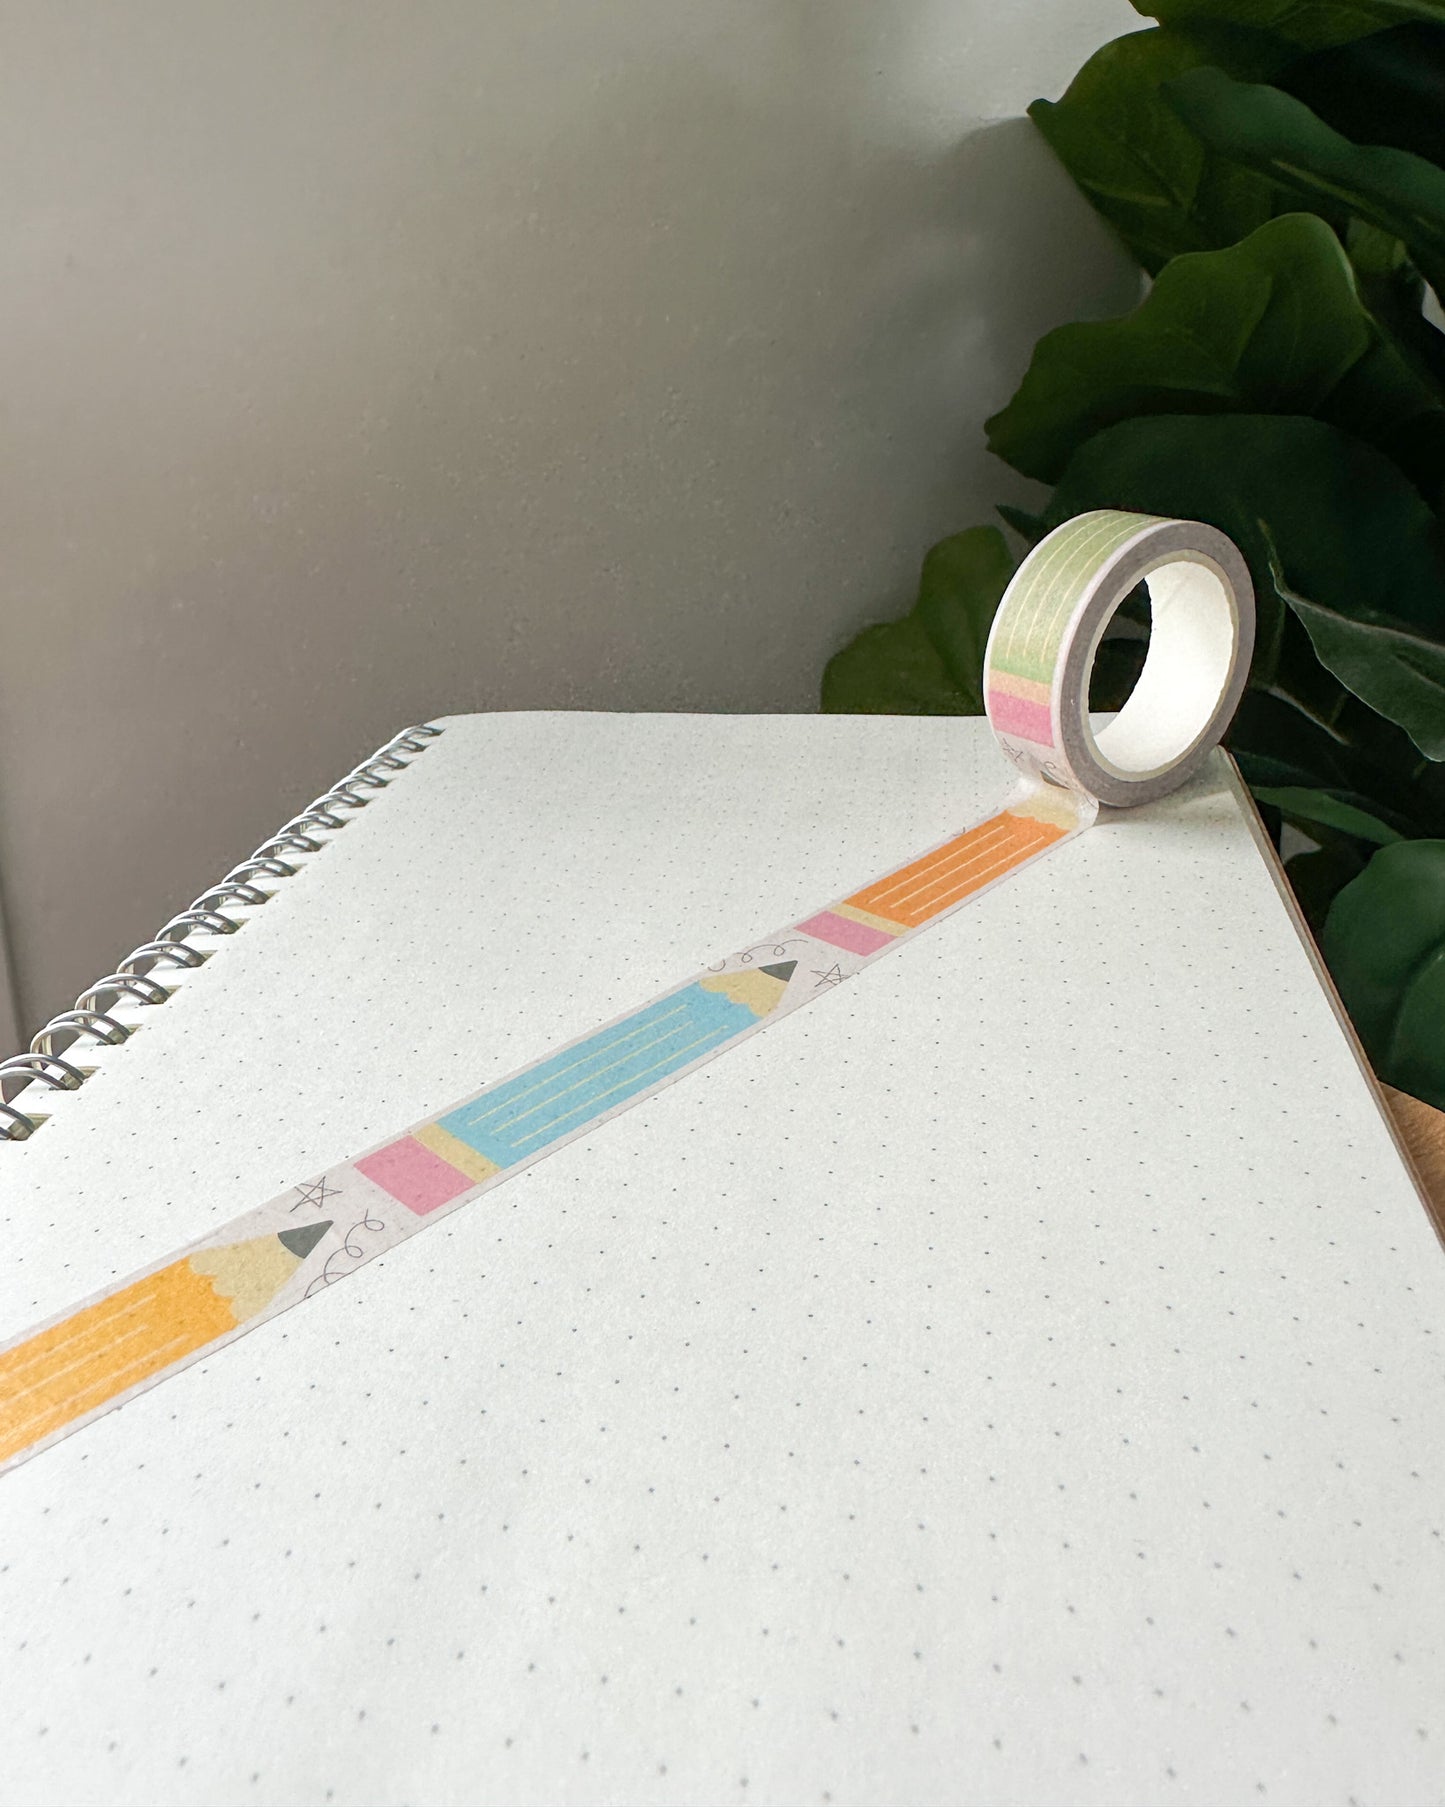 Pencil Washi Paper Tape